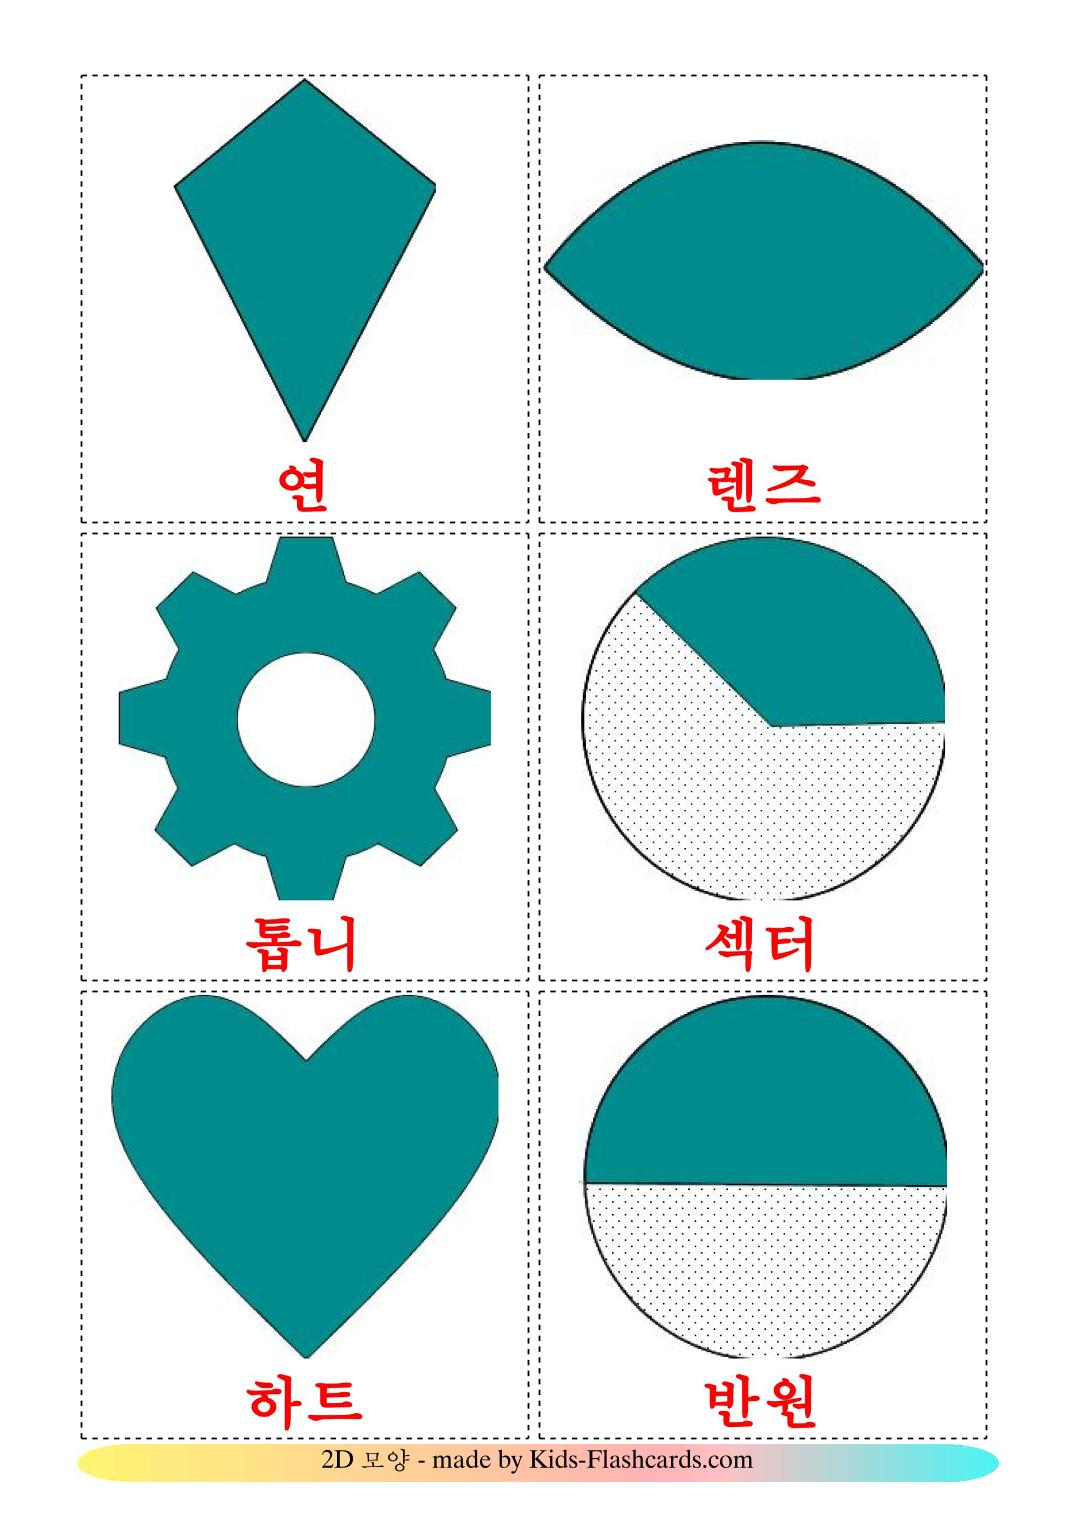 2D Shapes - 35 Free Printable korean Flashcards 